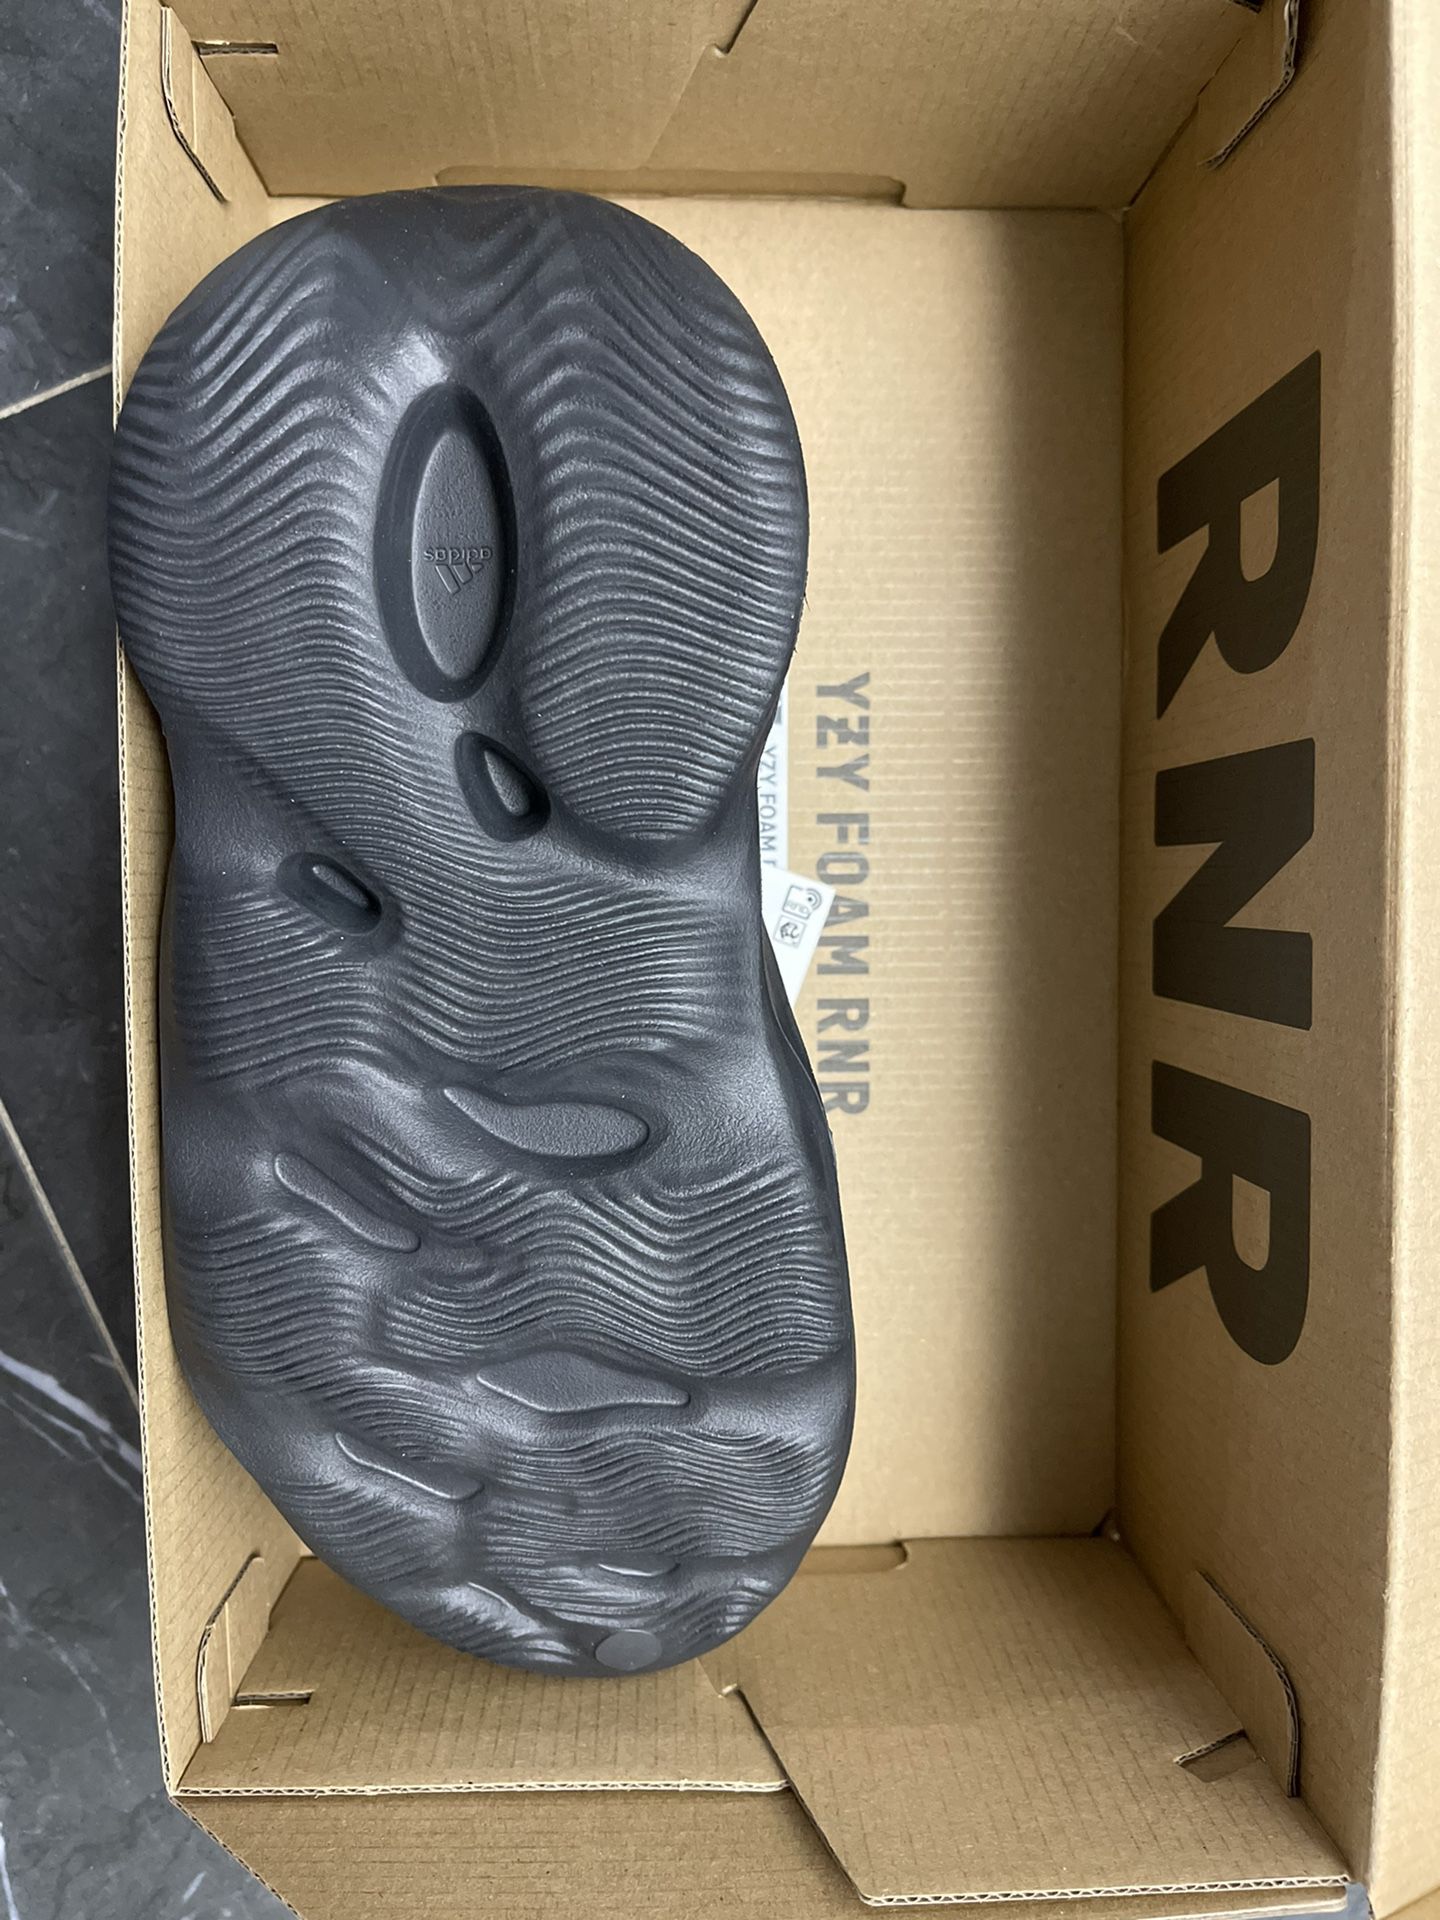 Yeezy Foam Runner “Sand Grey” US 9 for Sale in Canoga Park, CA - OfferUp